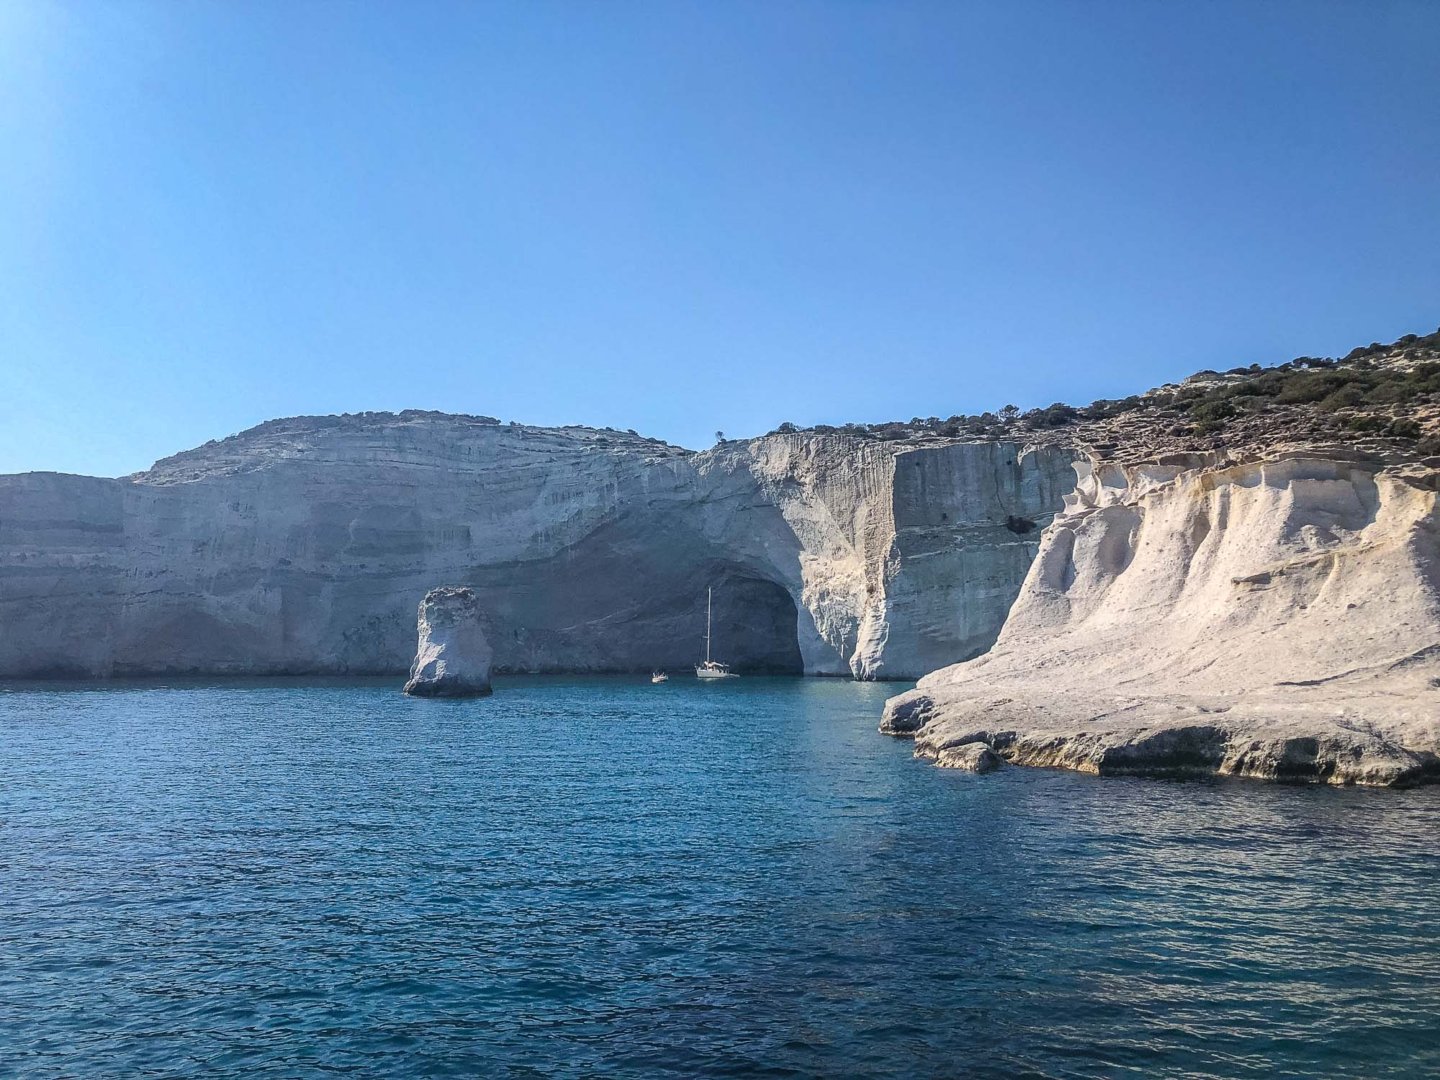 volcanic rocks and caves at Kleftiko Bay in Milos